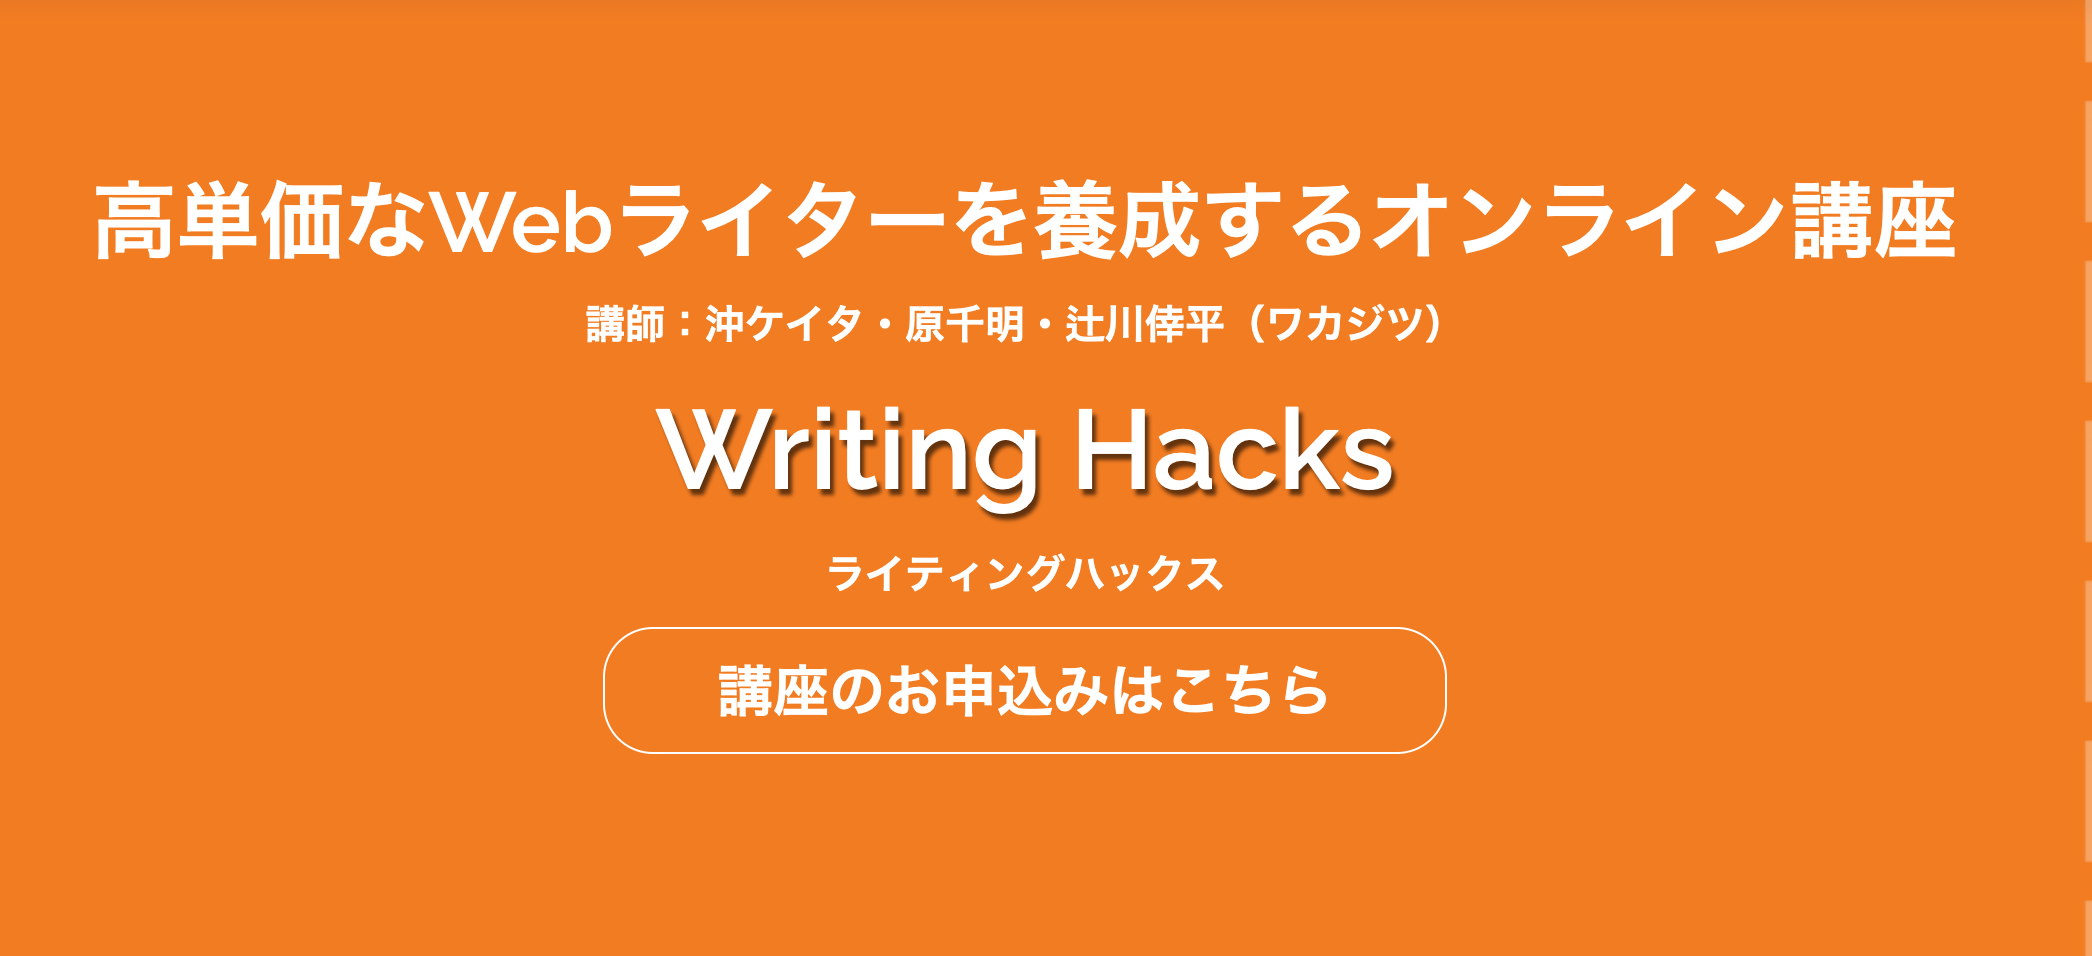 Writing Hacks紹介画像